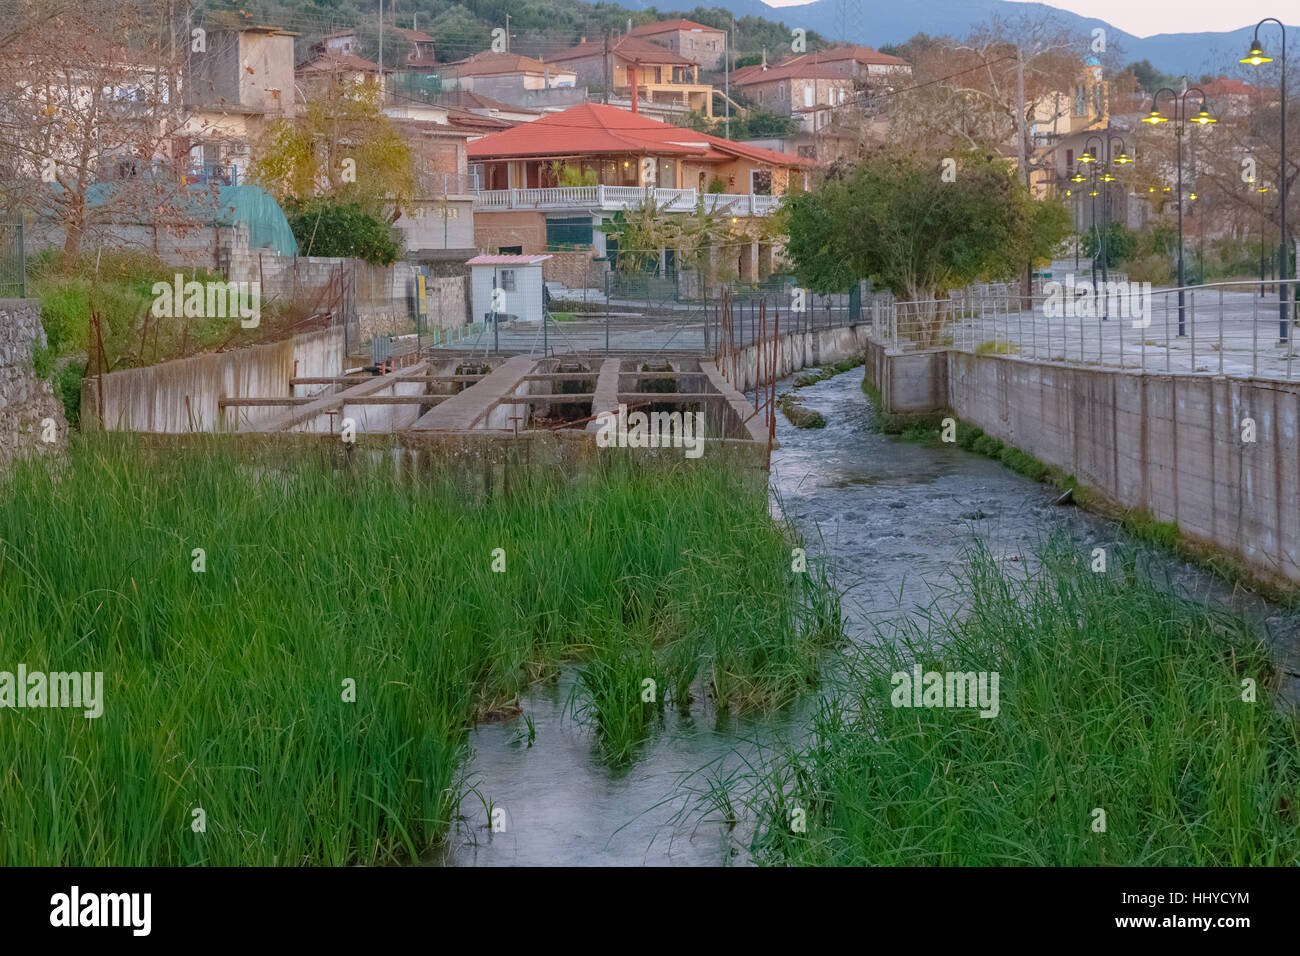 Trout farm facilities near river banks in Greece Stock Photo